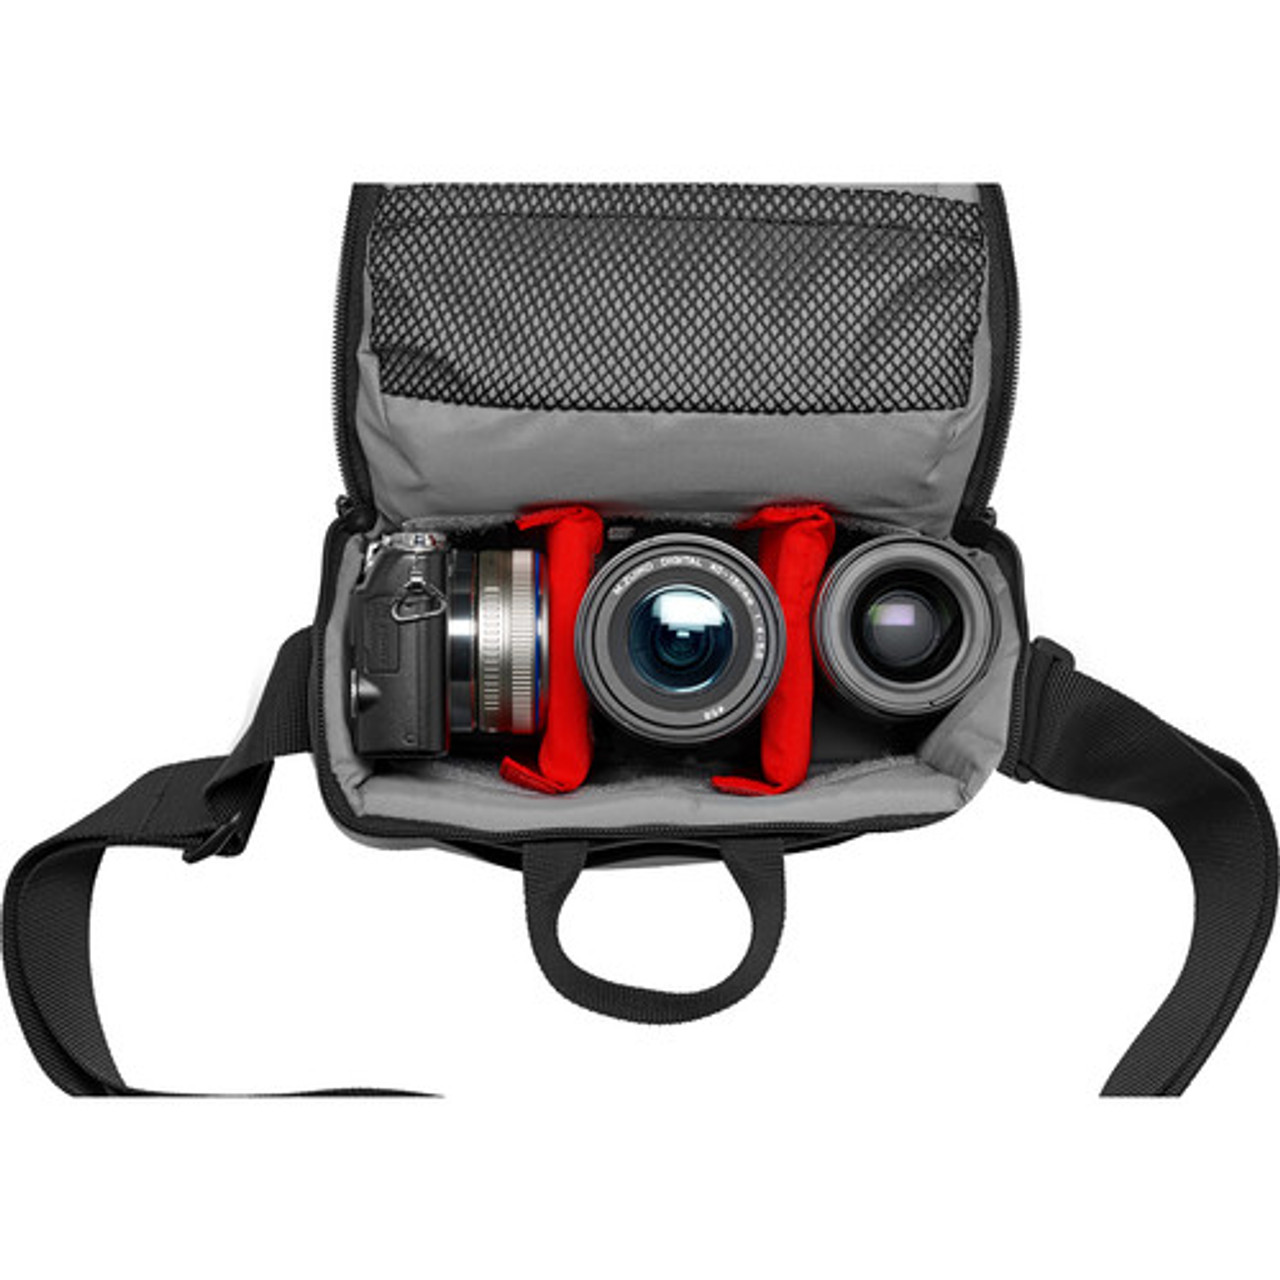 NX camera shoulder bag II Blue for DSLR - MB NX-SB-IIBU